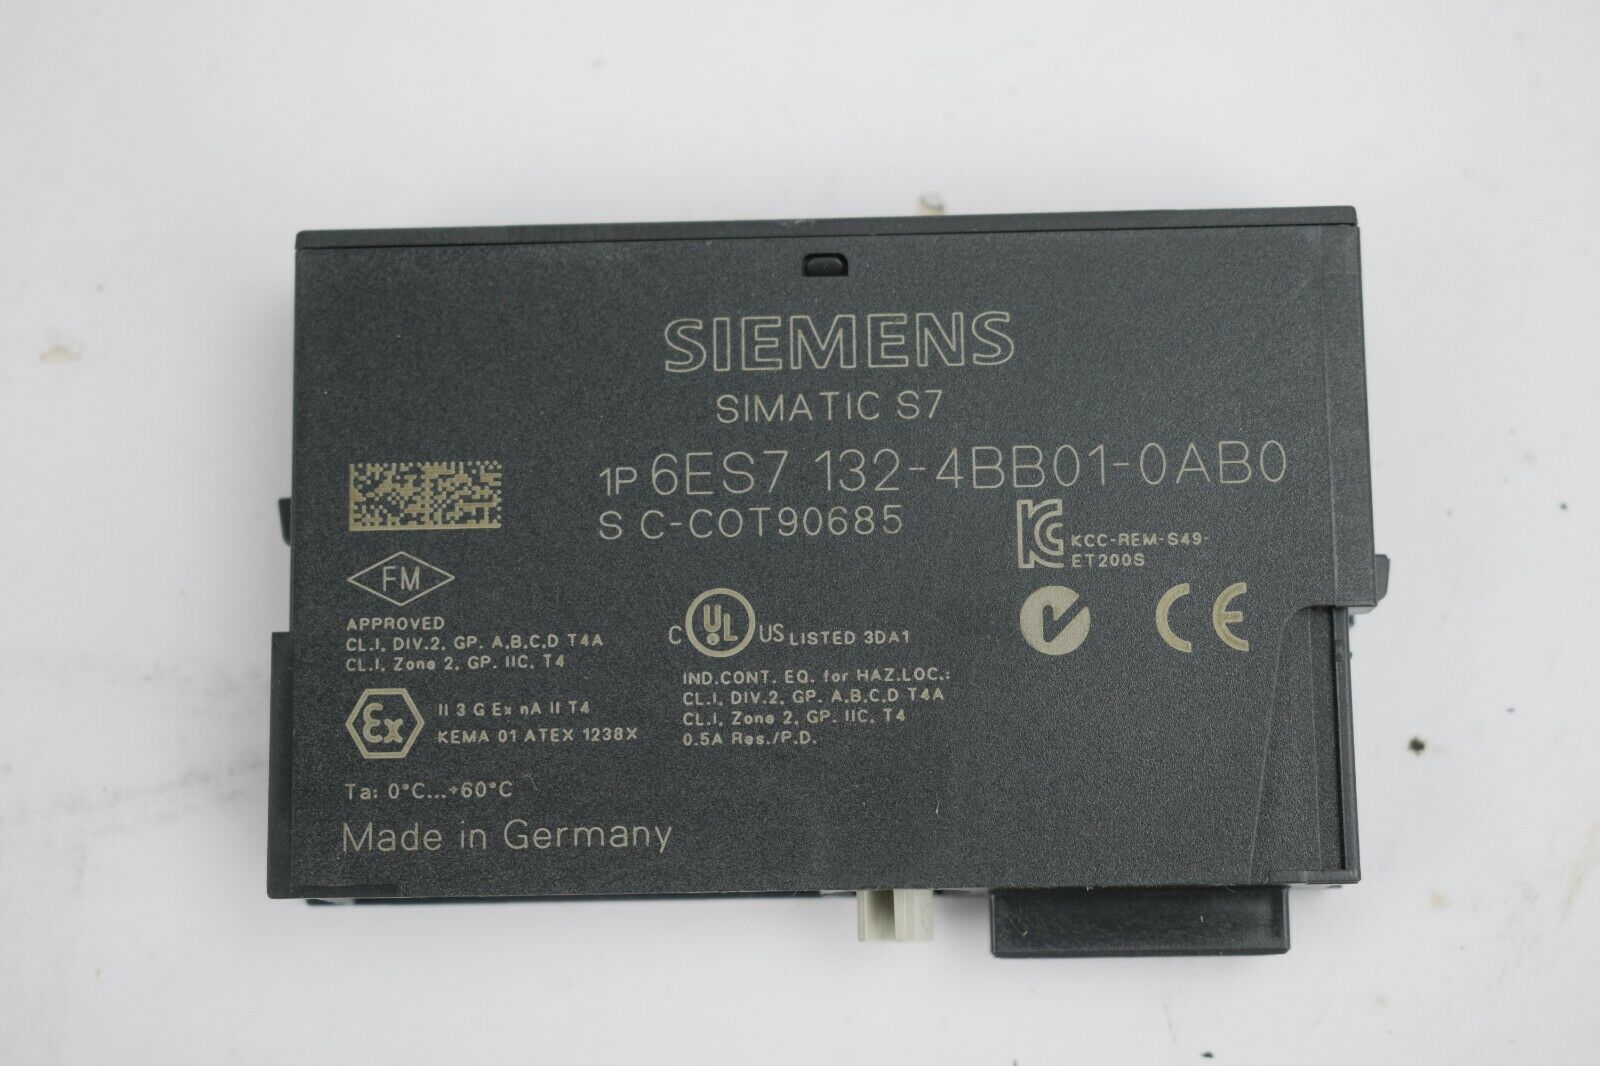 Siemens simatic S7 6ES7 132-4BB01-0AB0 ( 6ES7132-4BB01-0AB0 )